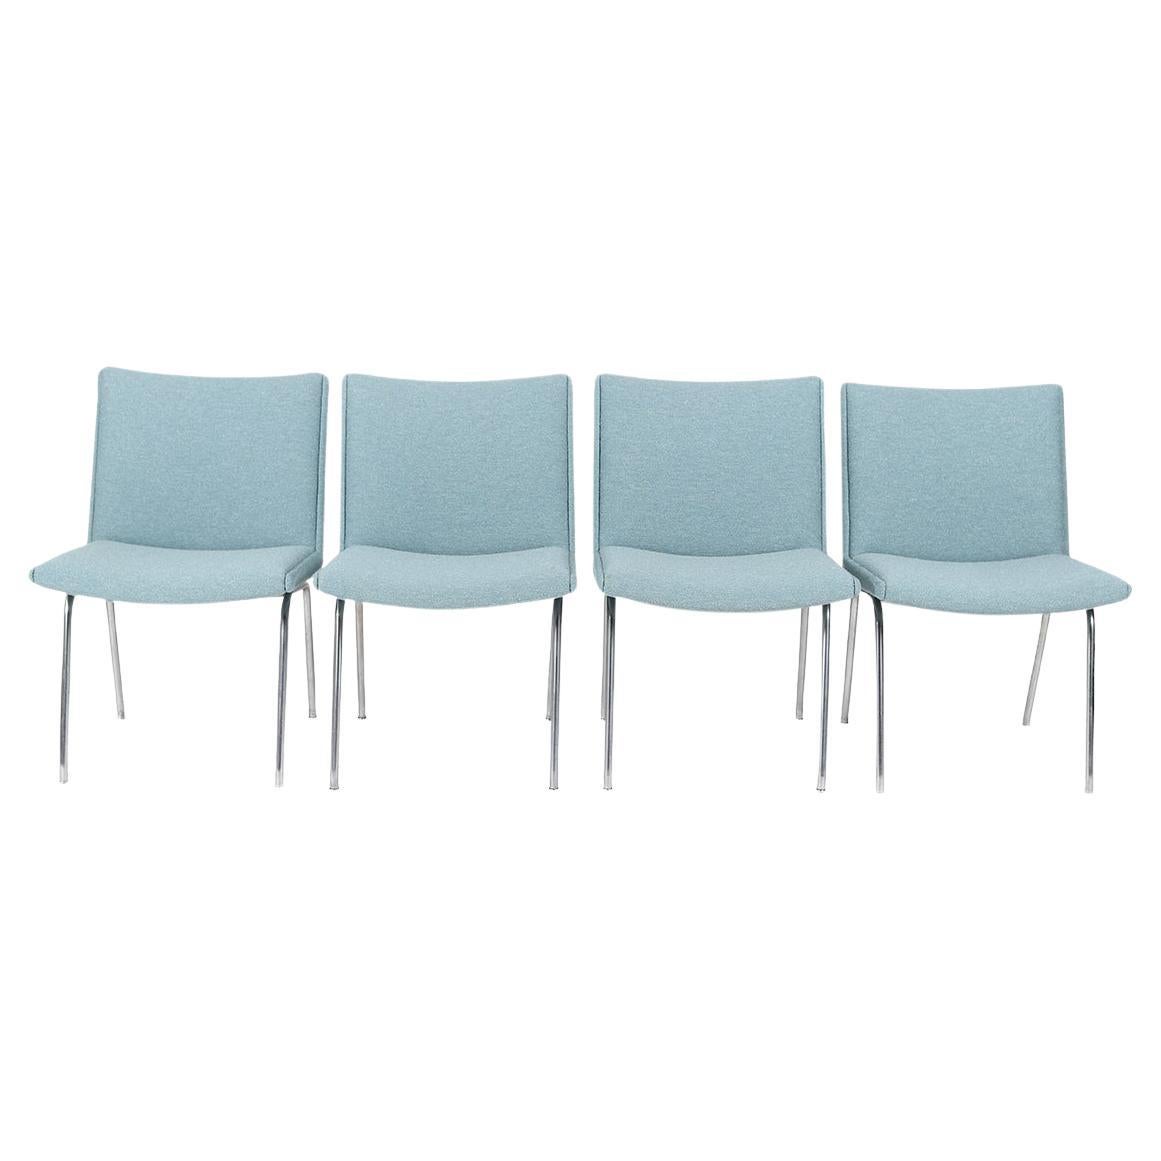 Danish Modern "Airport" Chairs by Hans J. Wegner